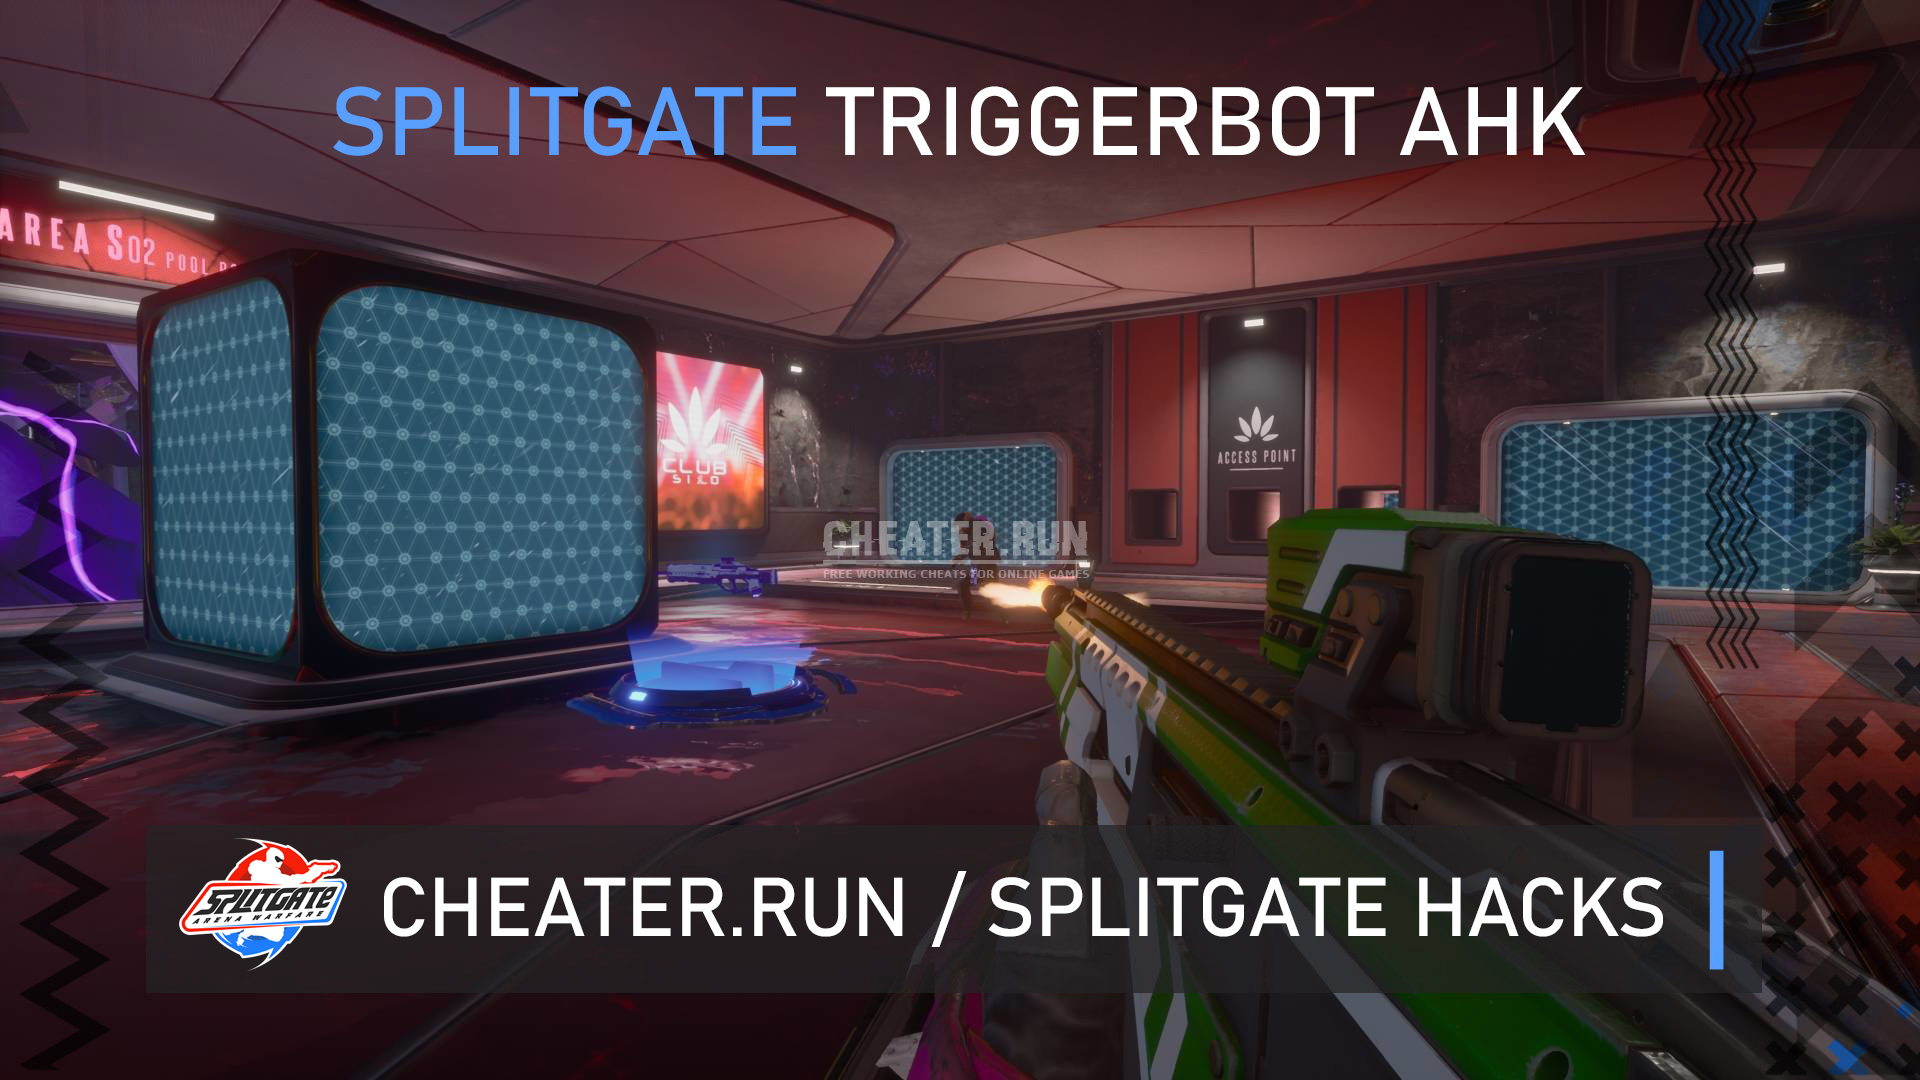 Splitgate triggerbot hacks